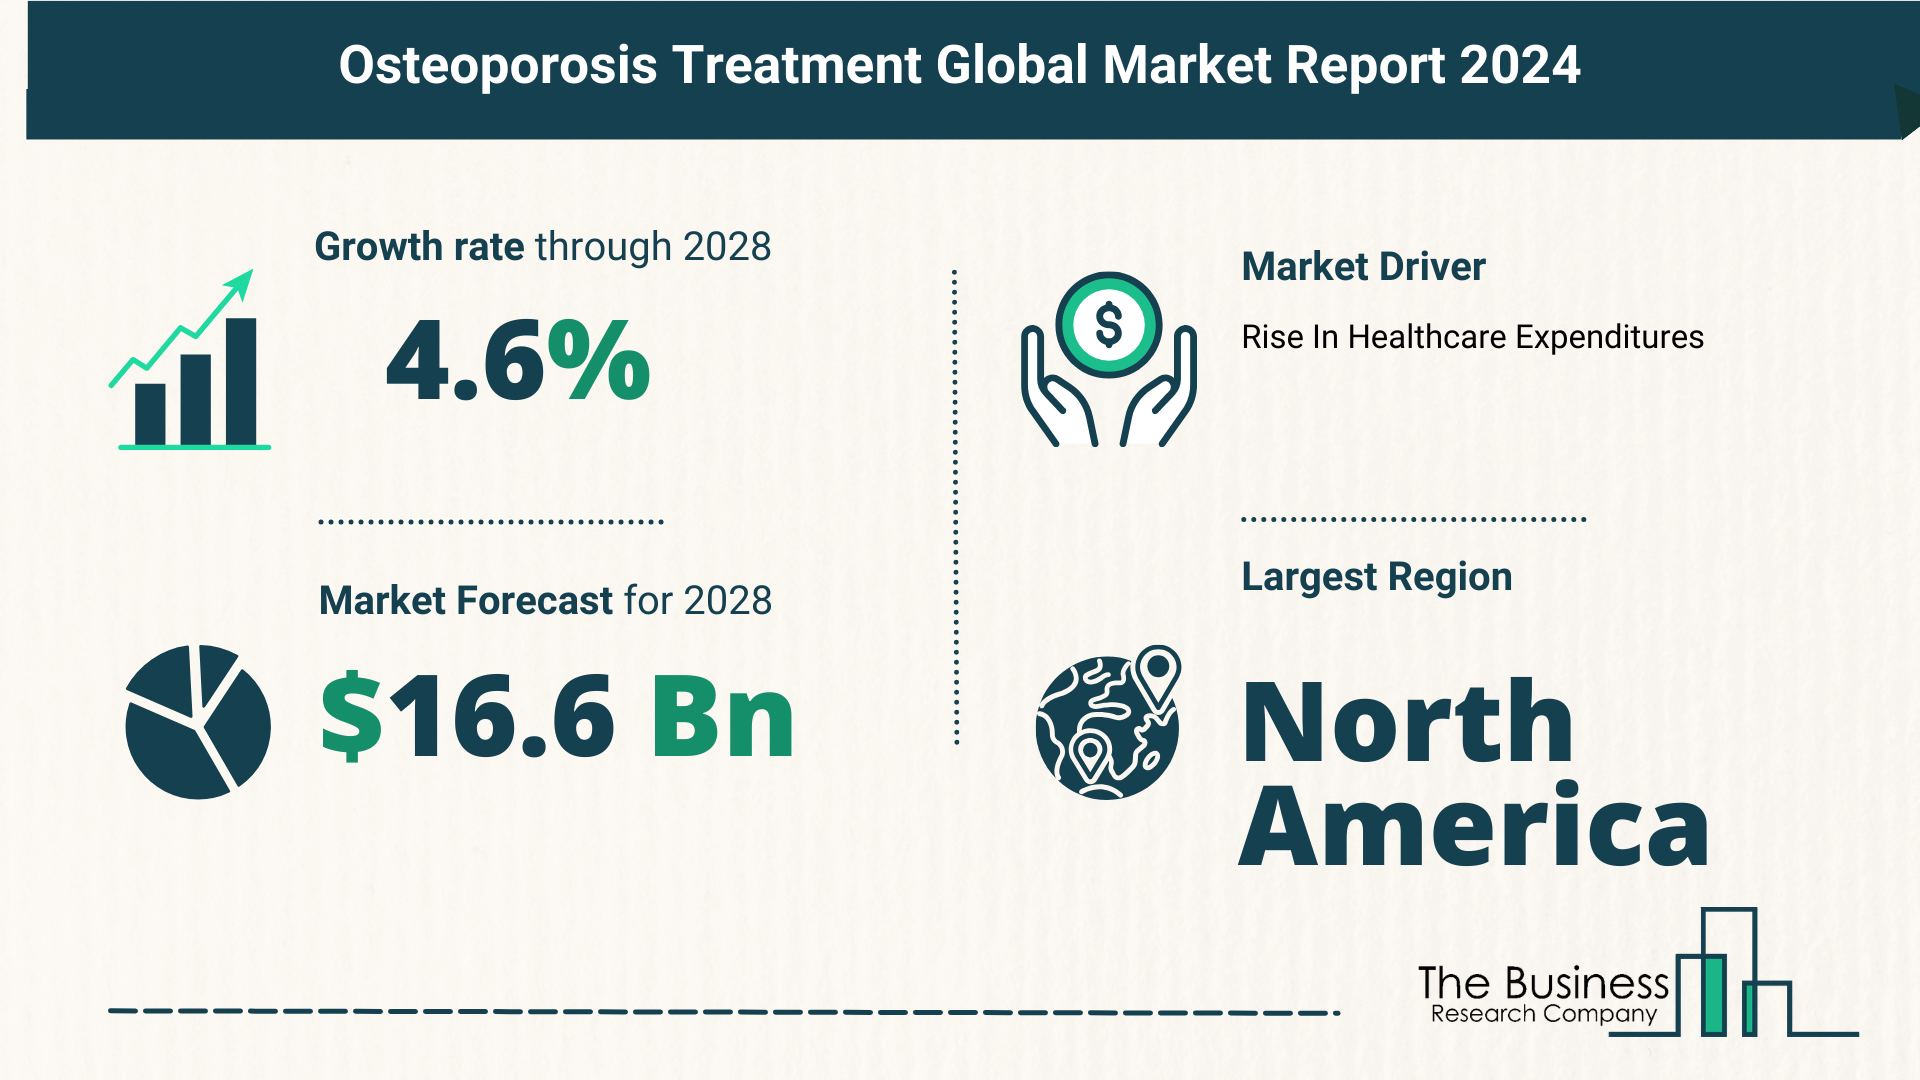 Global Osteoporosis Treatment Market